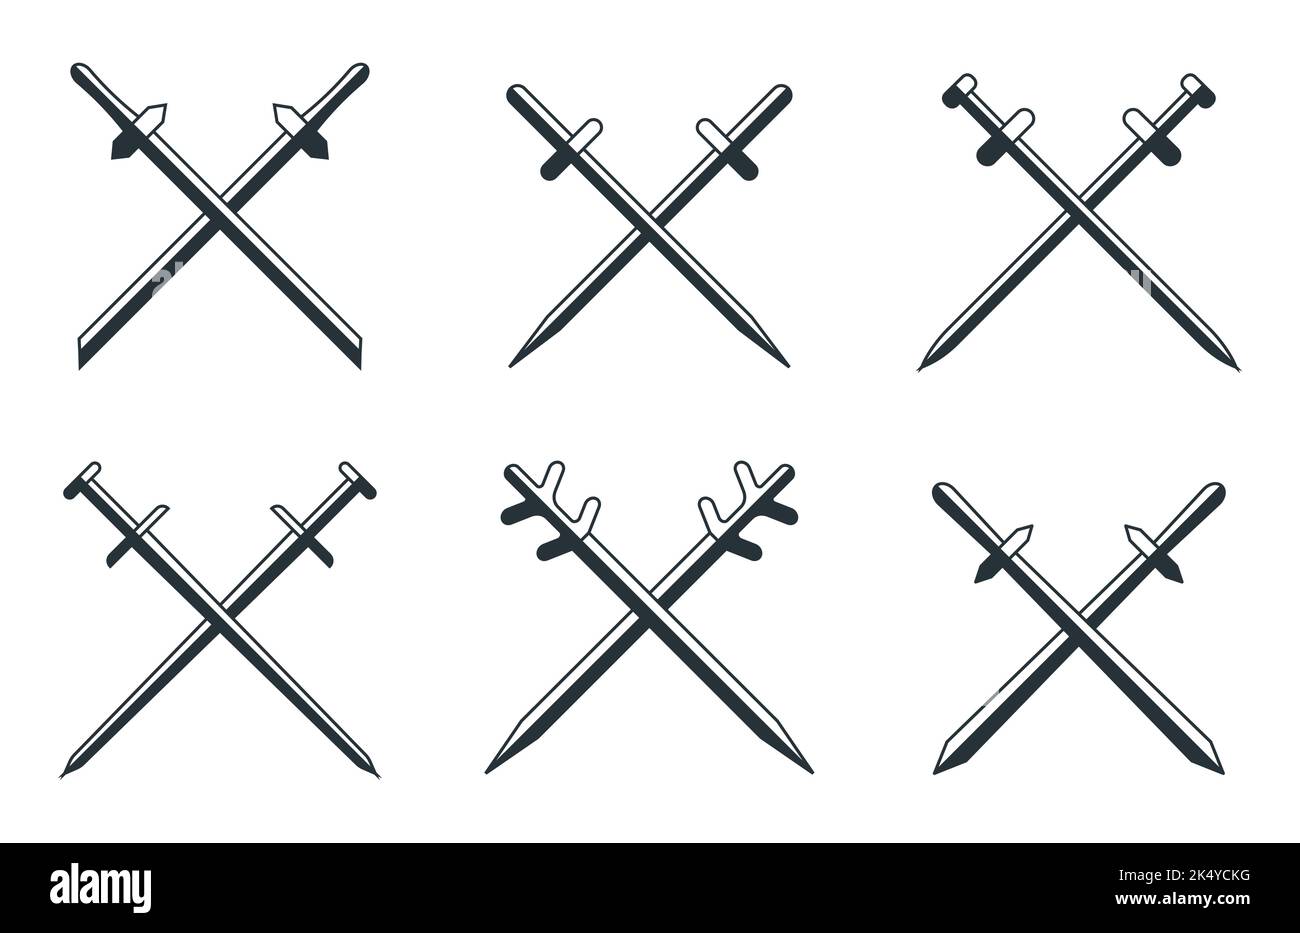 90+ Crossed Cutlass Pirate Sword Stock Illustrations, Royalty-Free